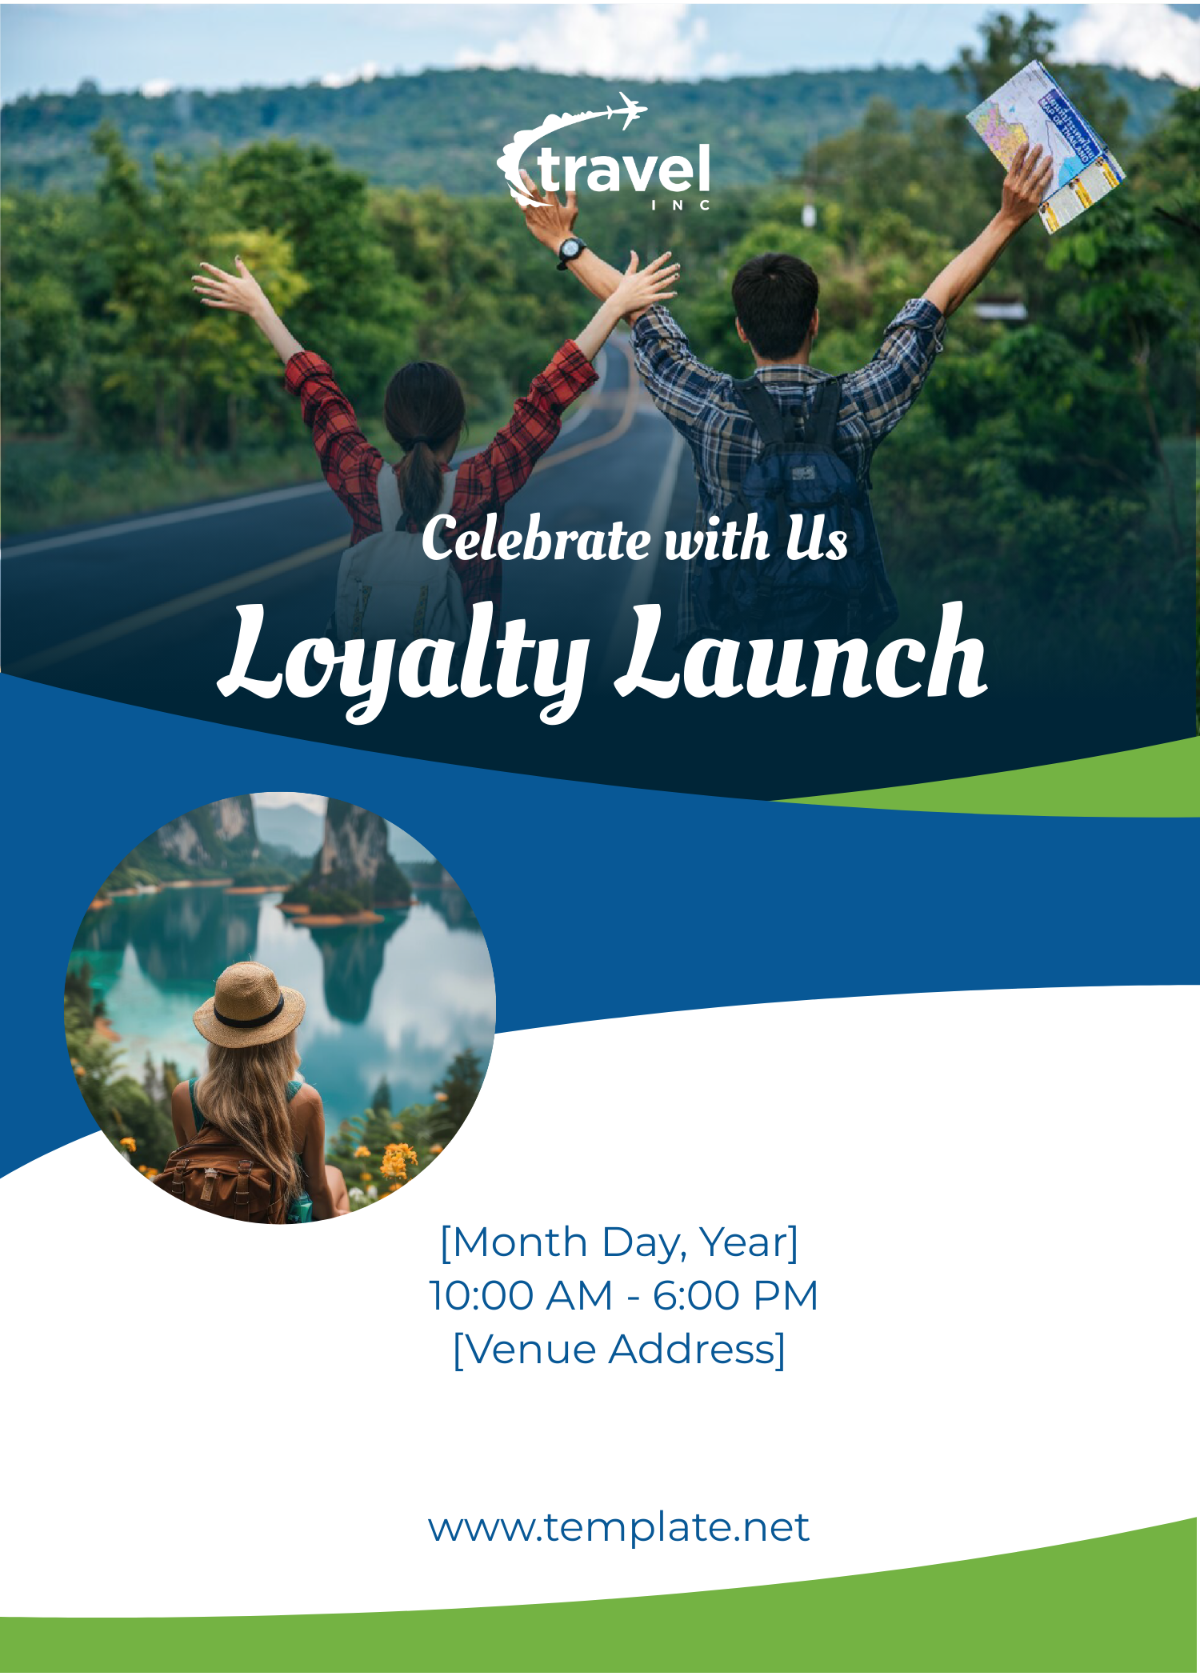 Travel Agency Loyalty Program Launch Invitation